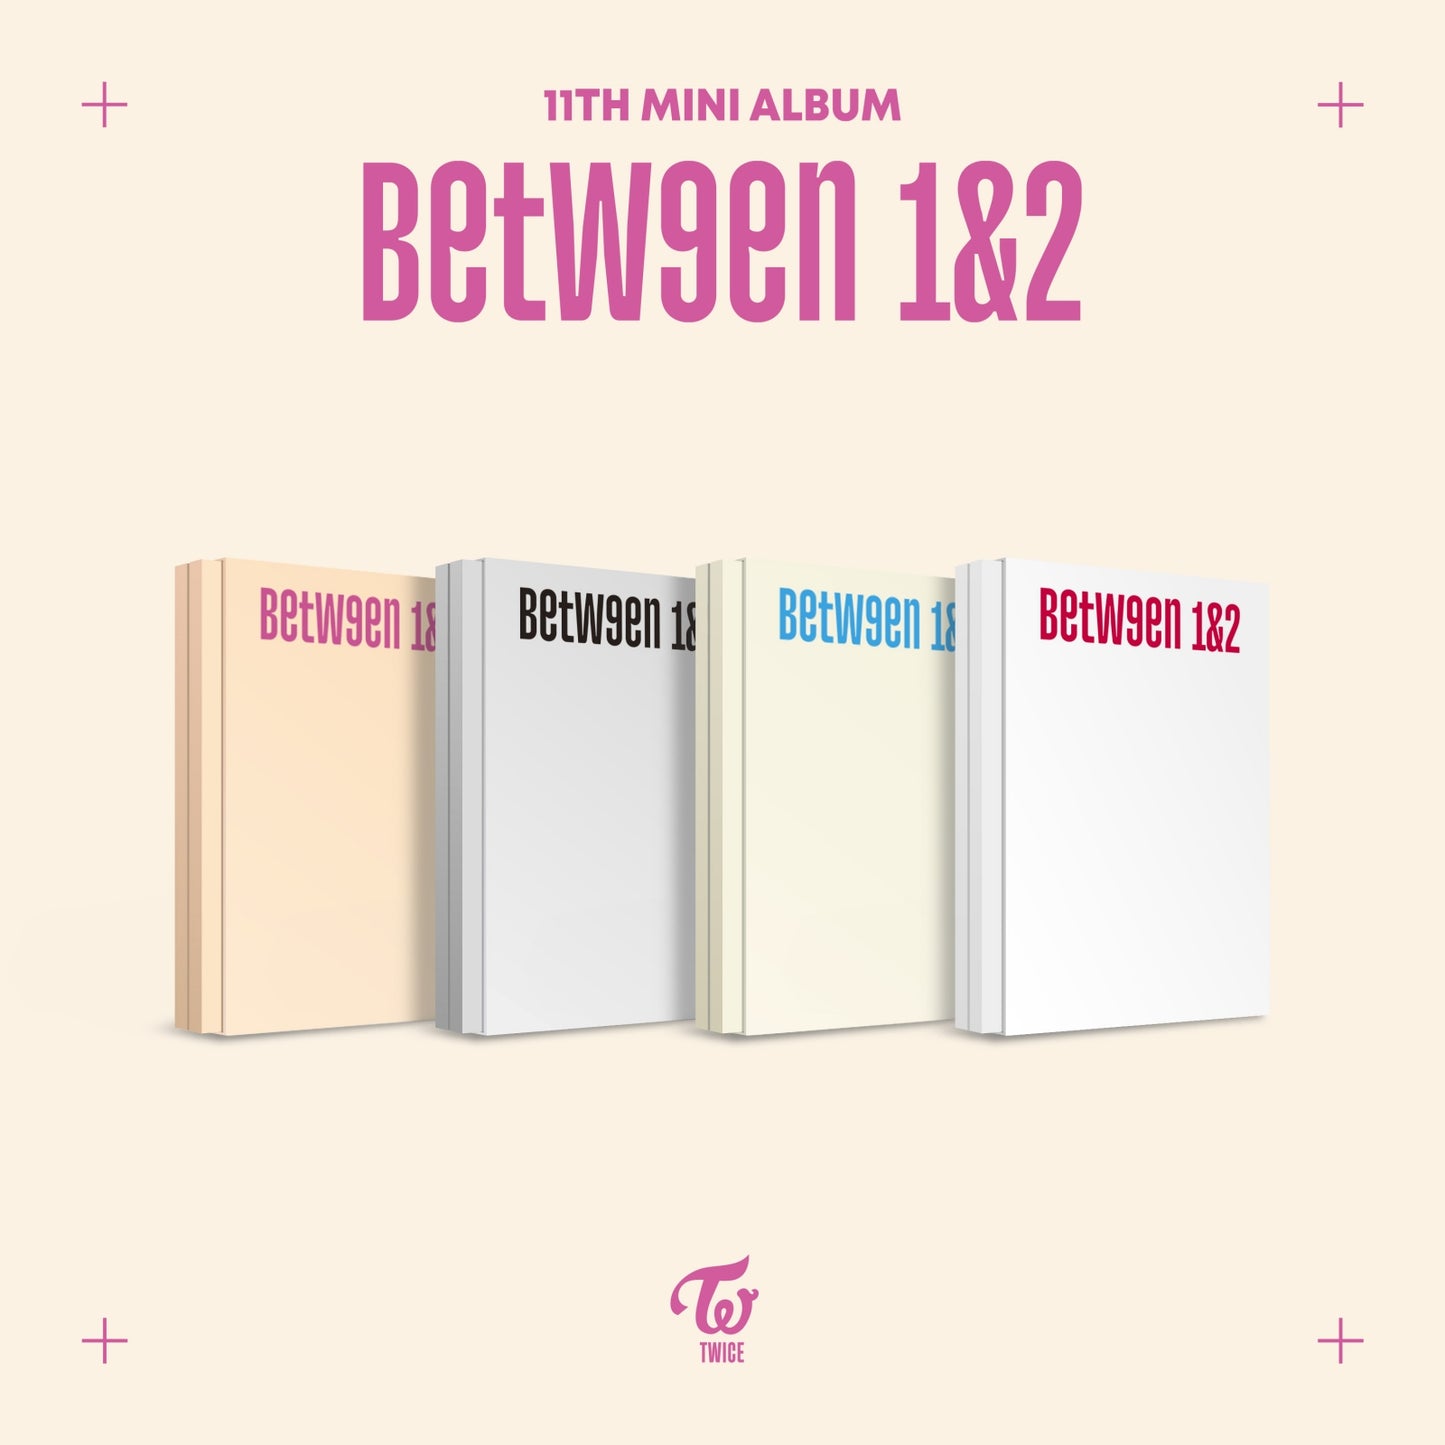 (ONE) TWICE - BETWEEN 1&2 / 11th Mini Album